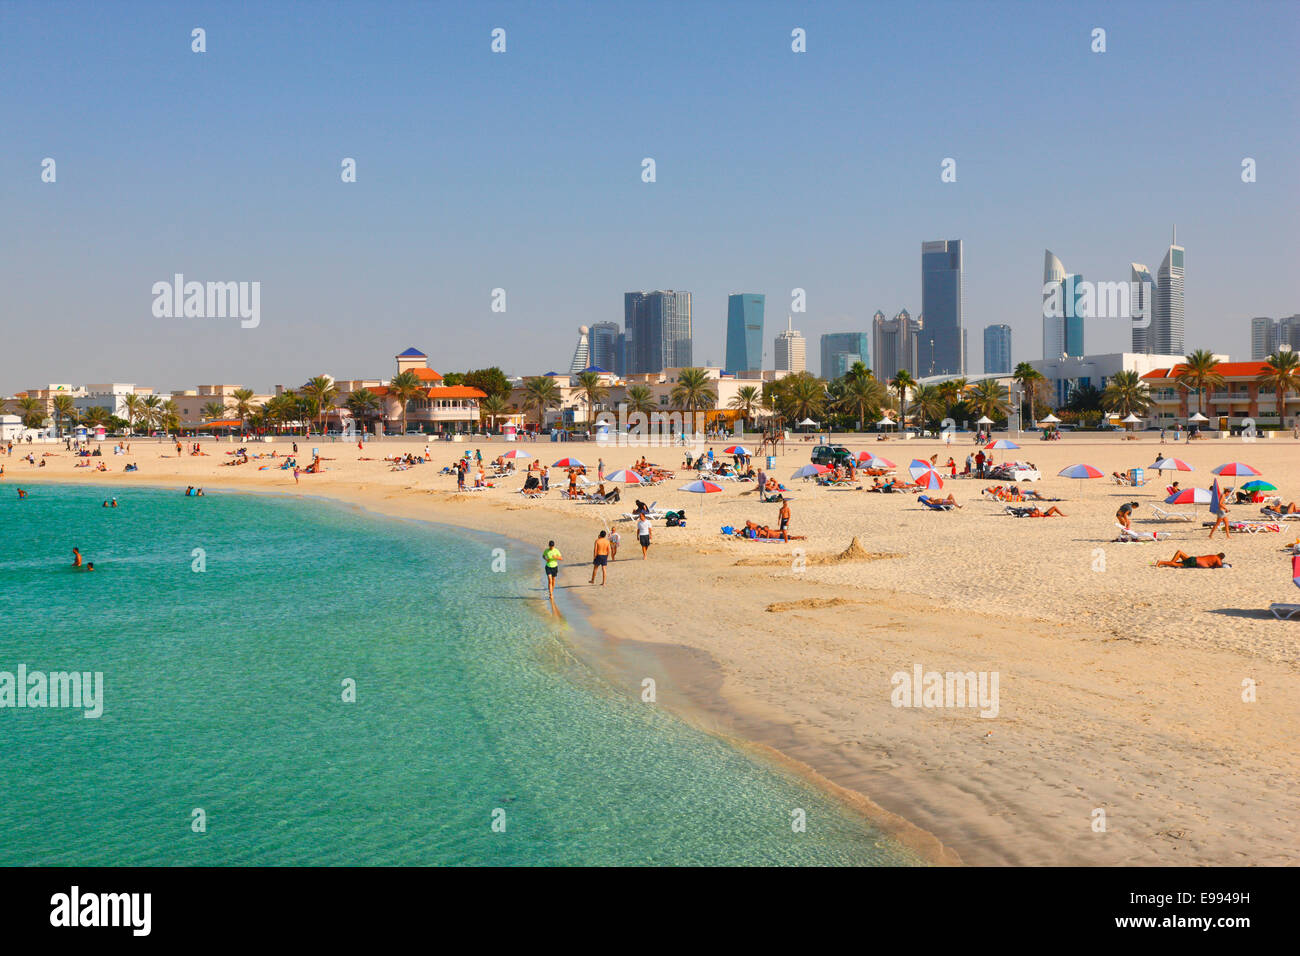 Dubai Beach - Jumeirah beach Stock Photo